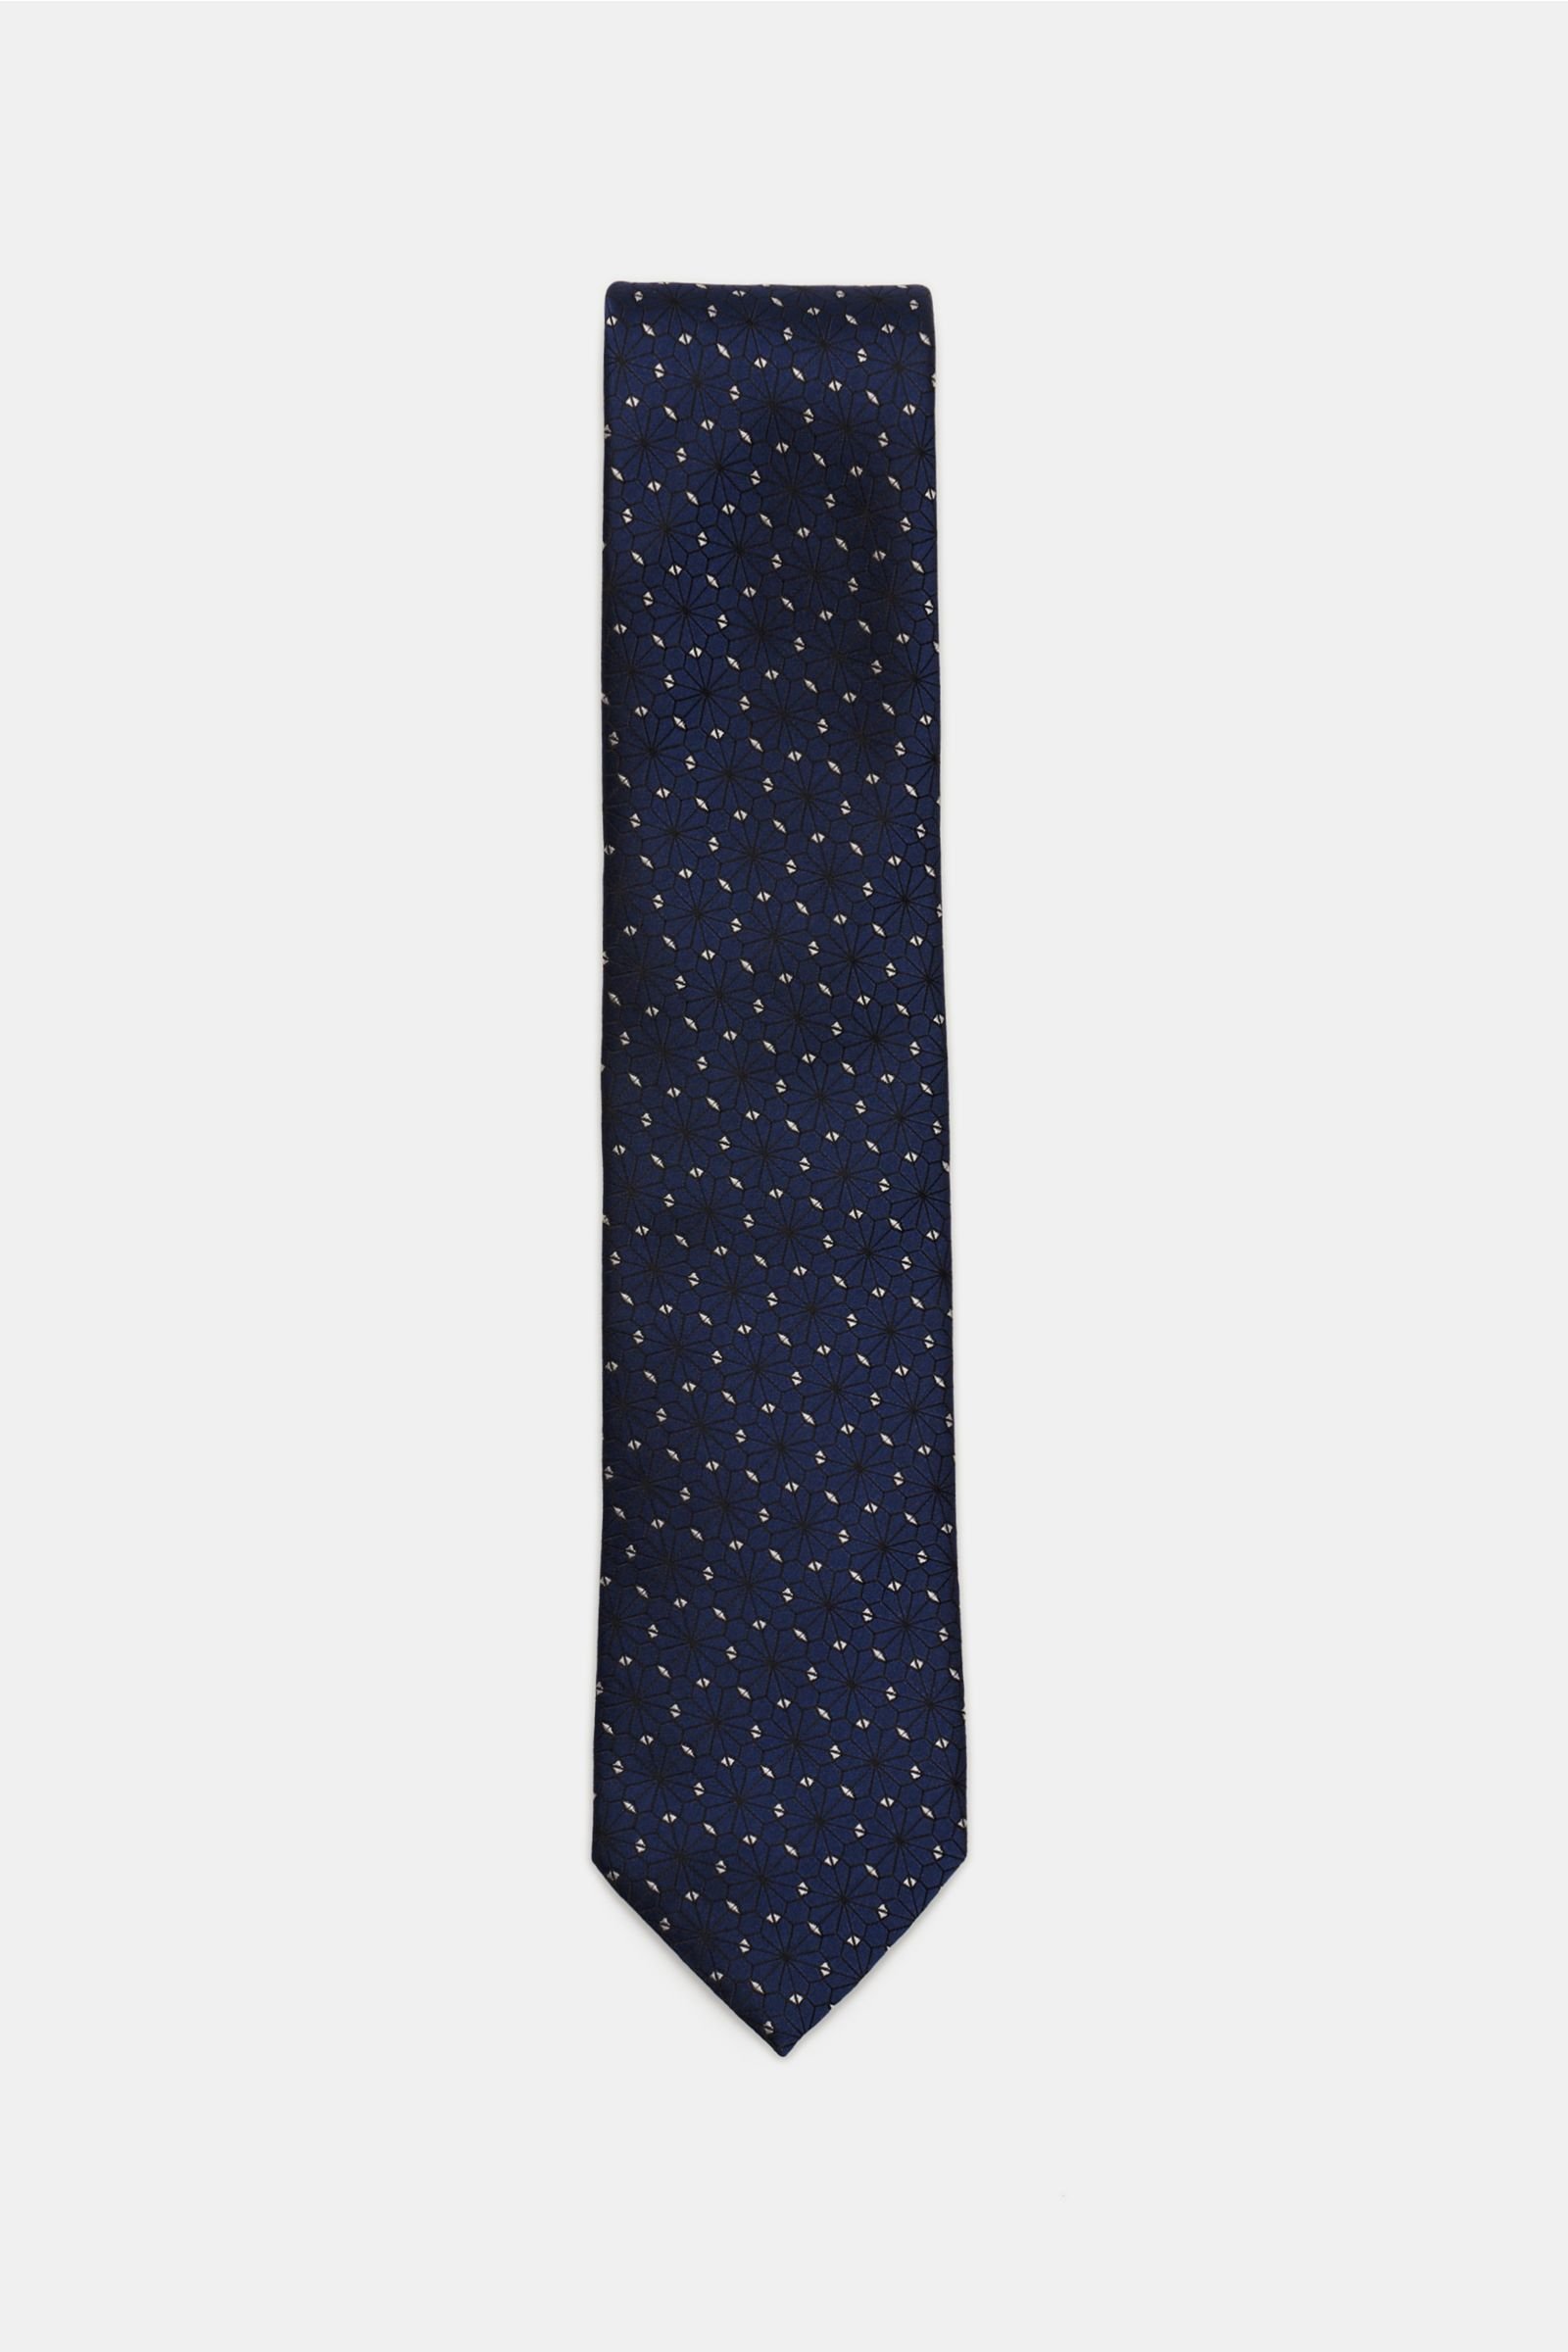 Silk tie smoky blue patterned